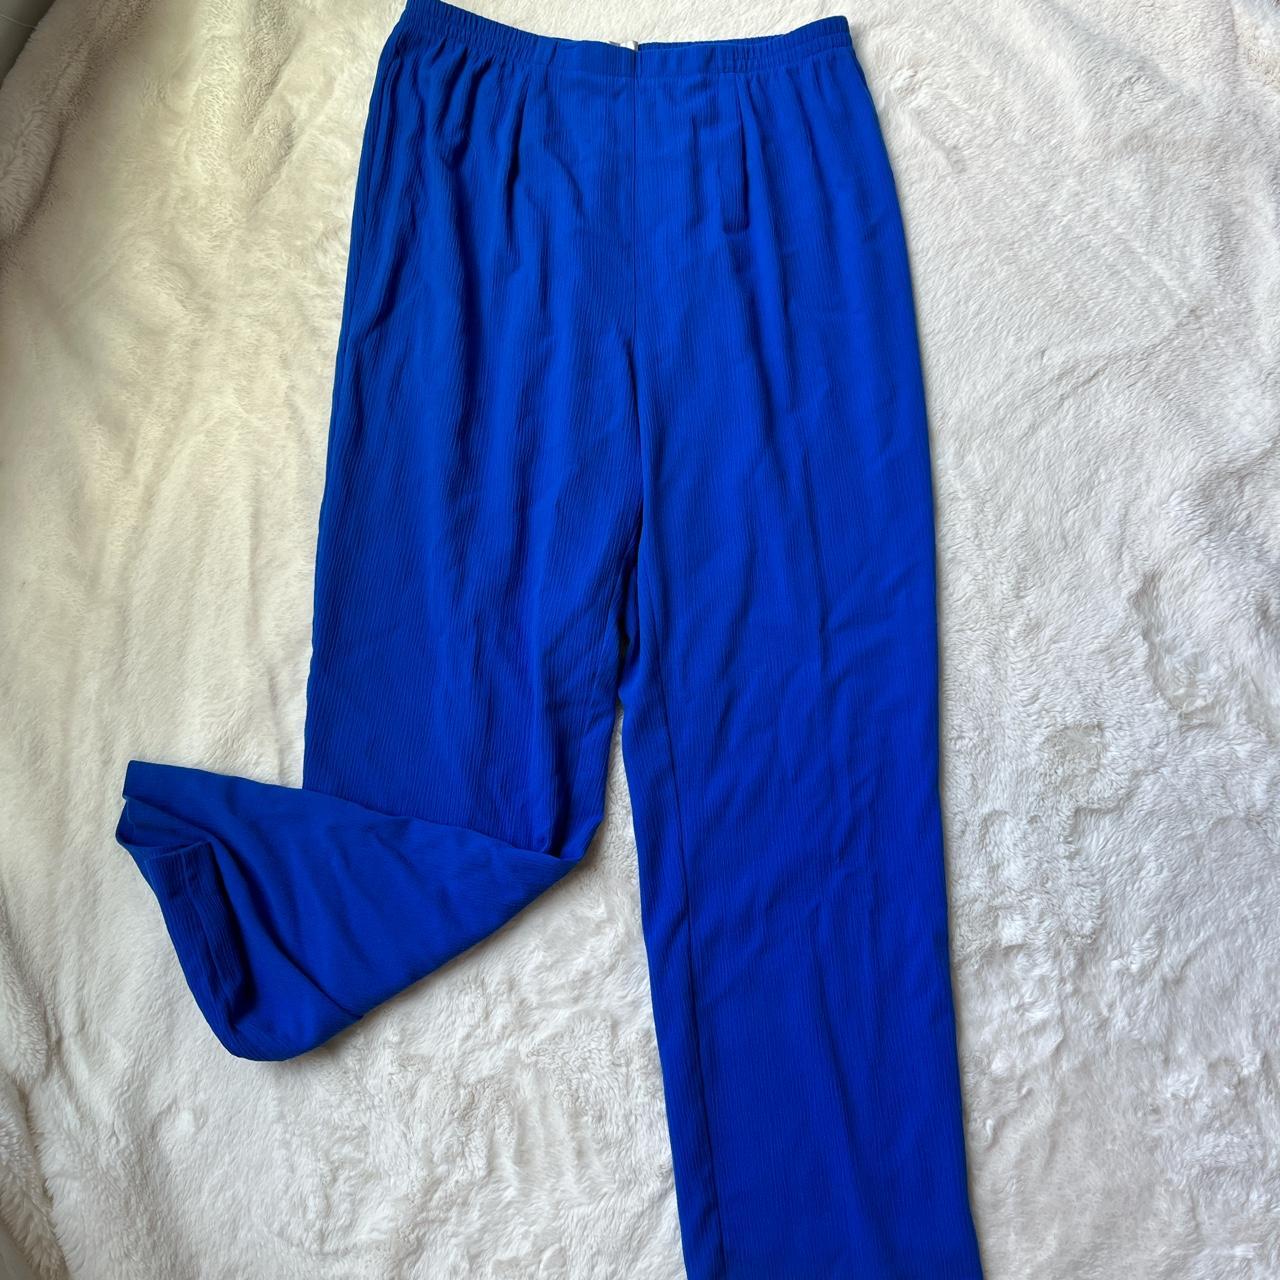 57 Royal Blue Pants Outfit Ideas | royal blue pants, blue pants outfit, royal  blue pants outfit